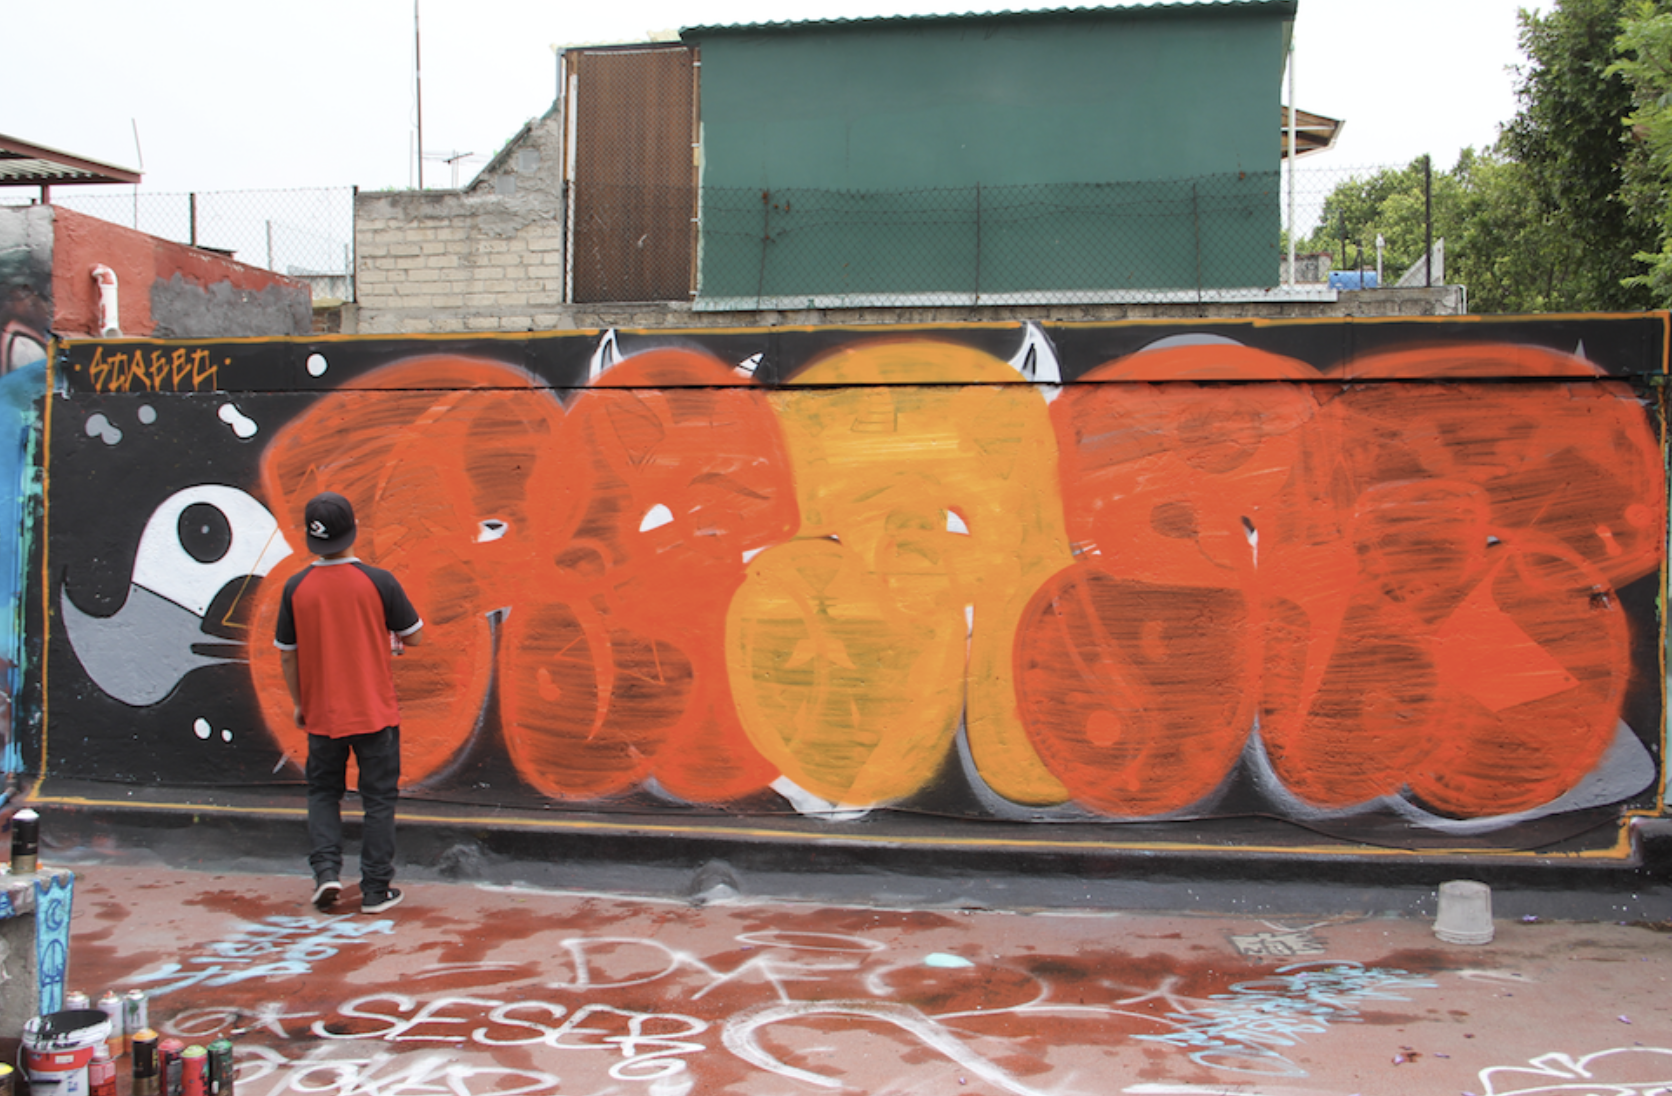 REANTS TM – Graffiti Playground